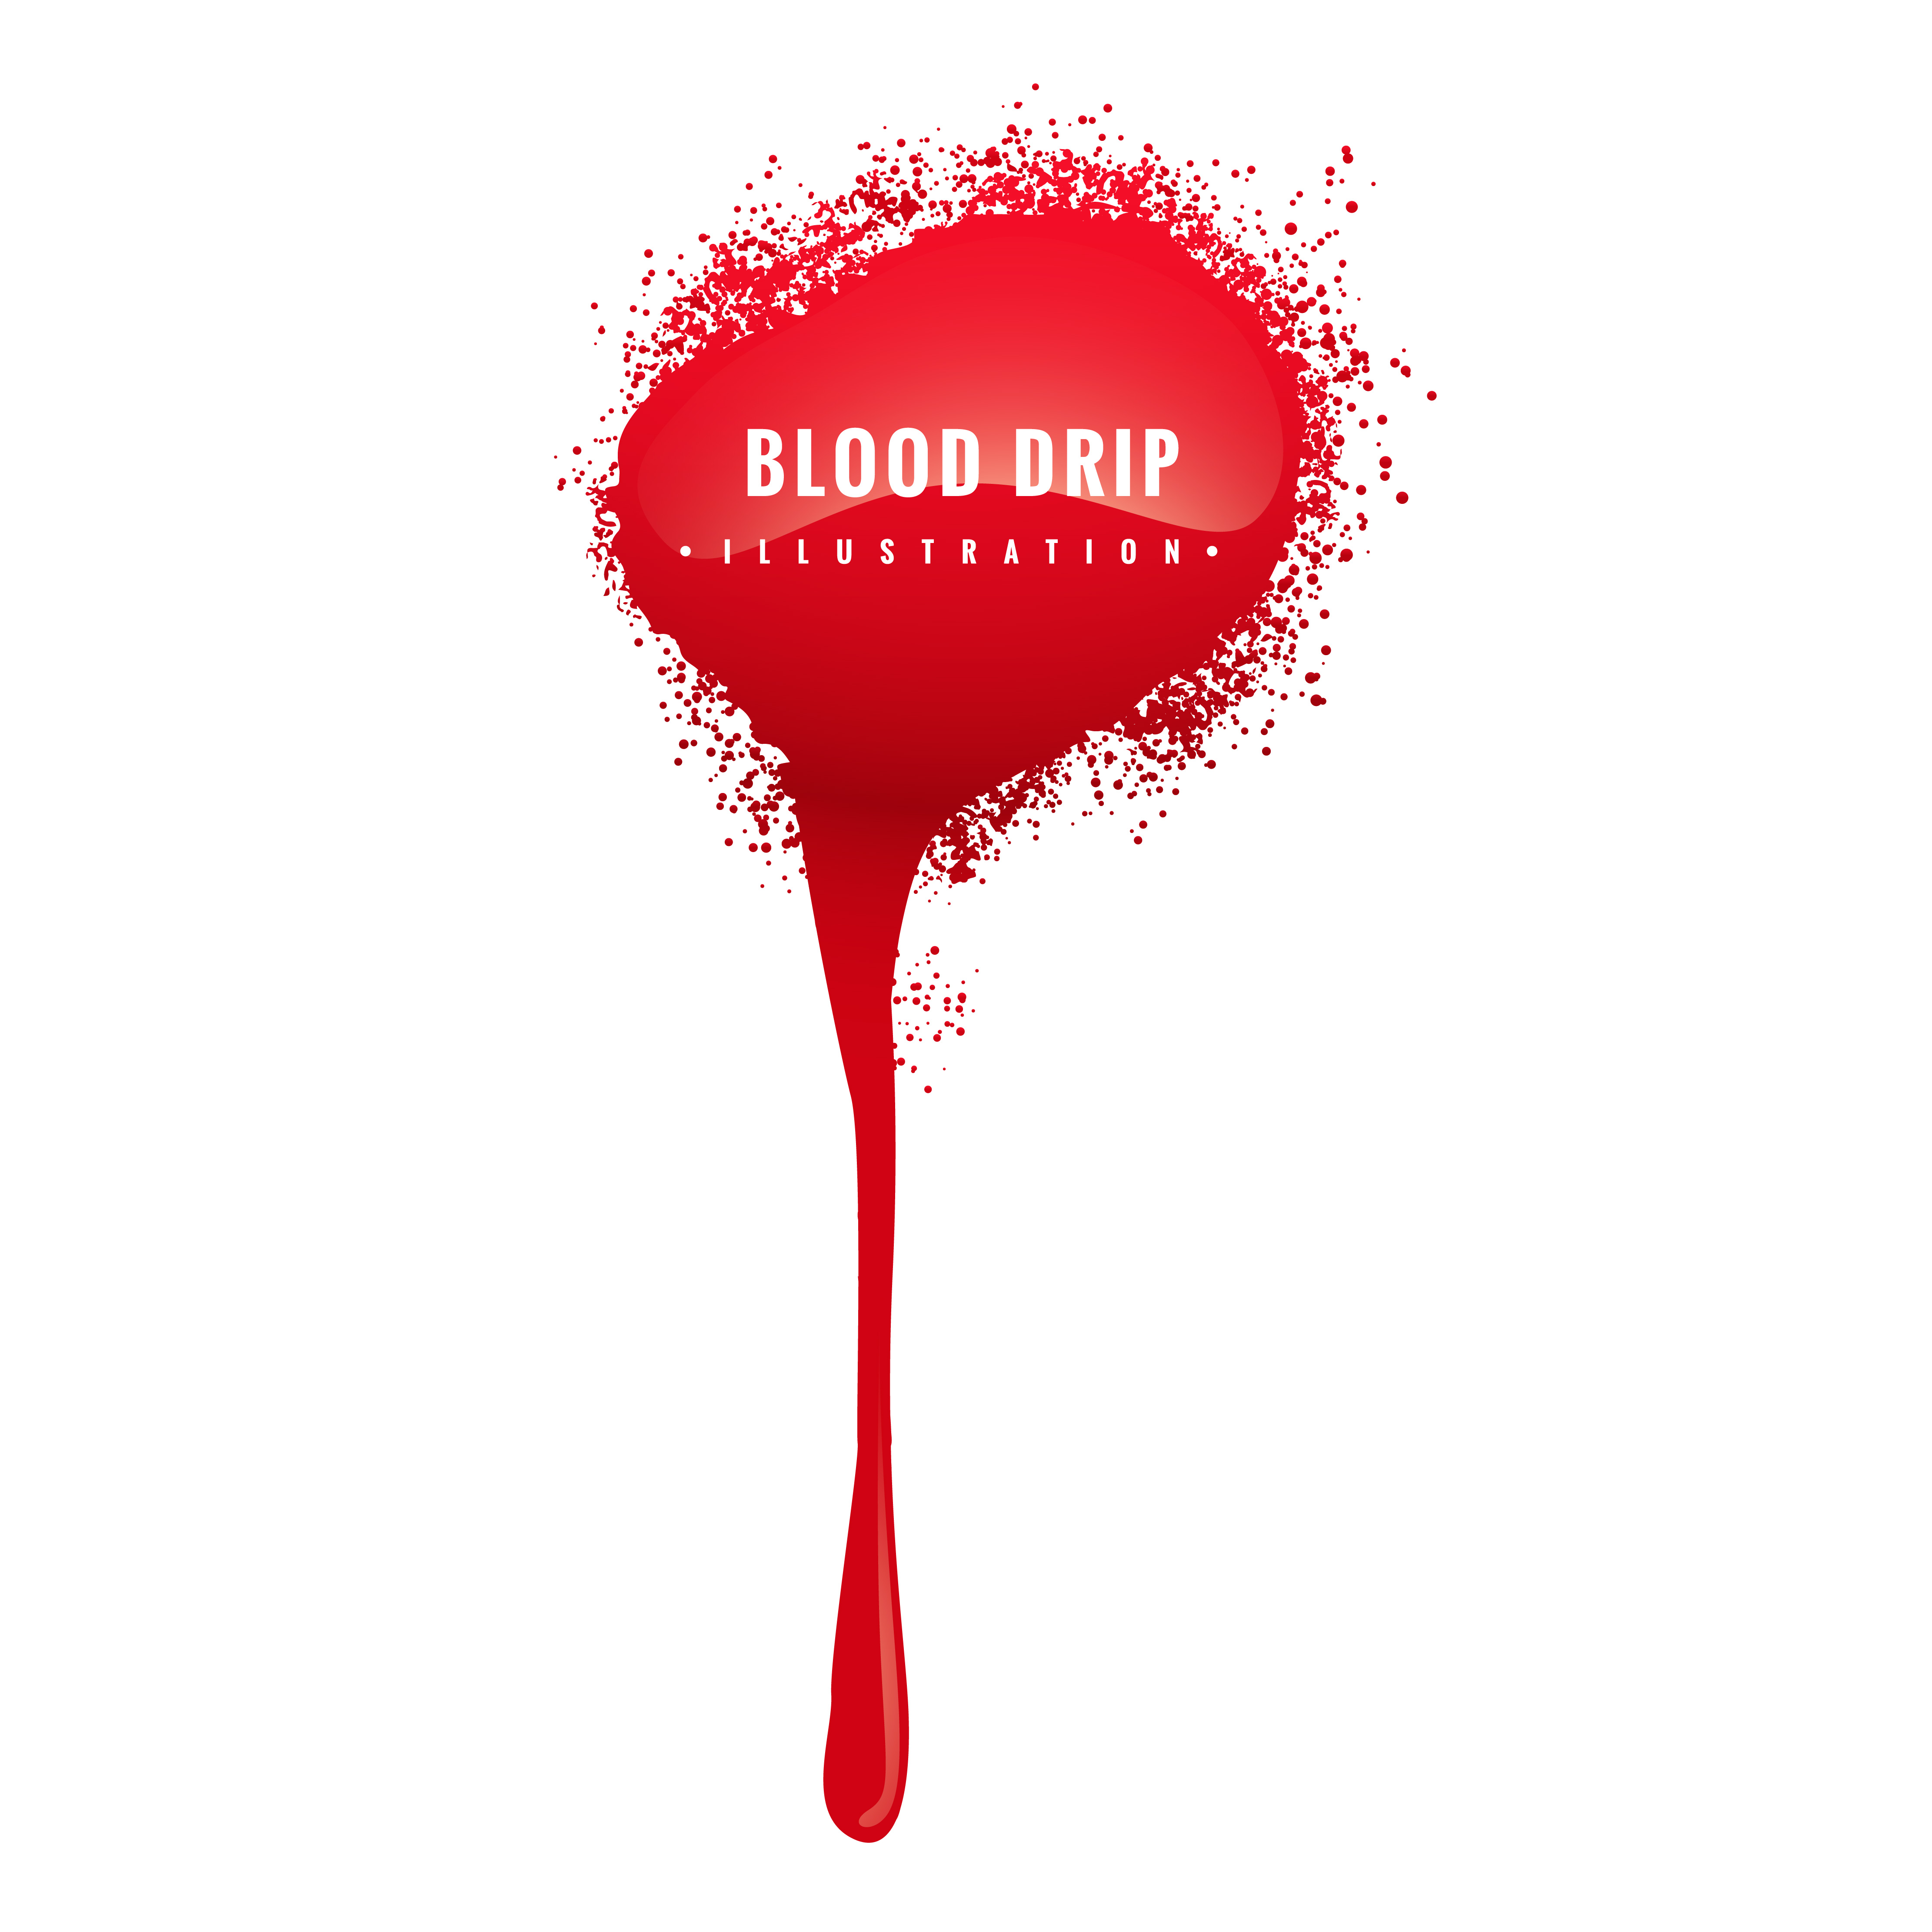 Download Blood Free Vector Art - (462 Free Downloads)